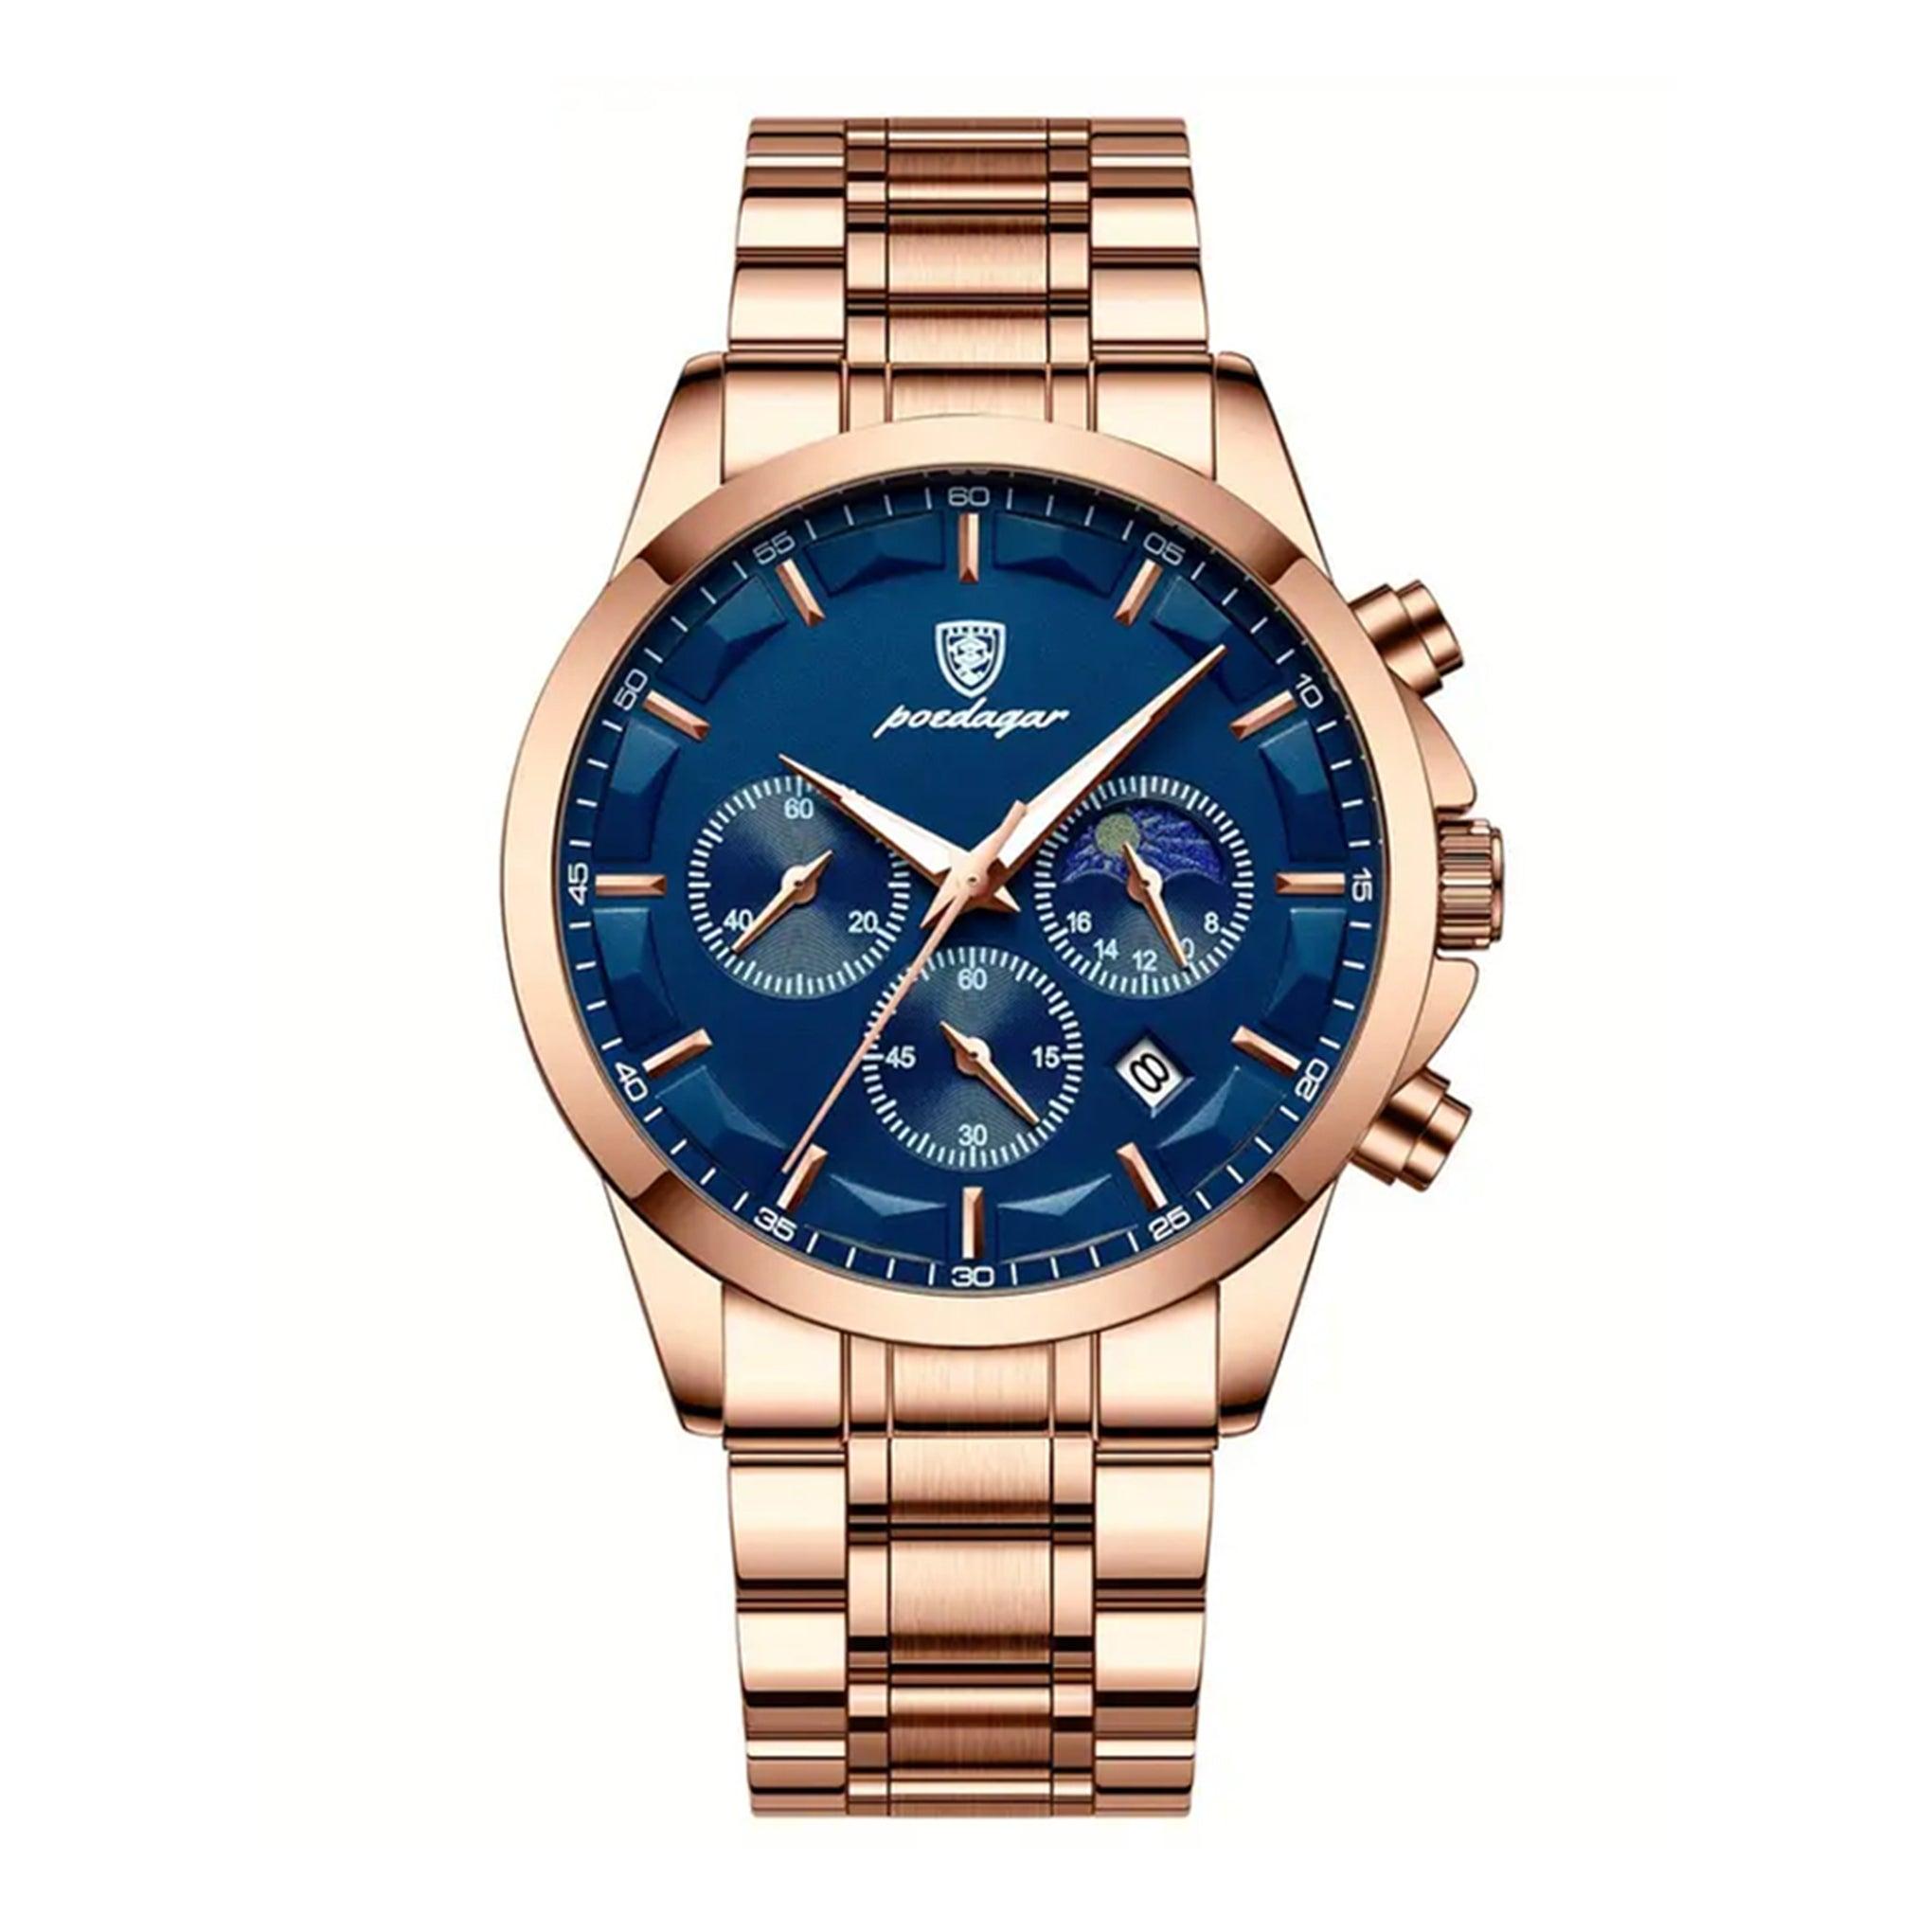 Poedagar Men's Quartz Rose Gold Stainless Steel Band Blue Dial Watch - 928rgbus